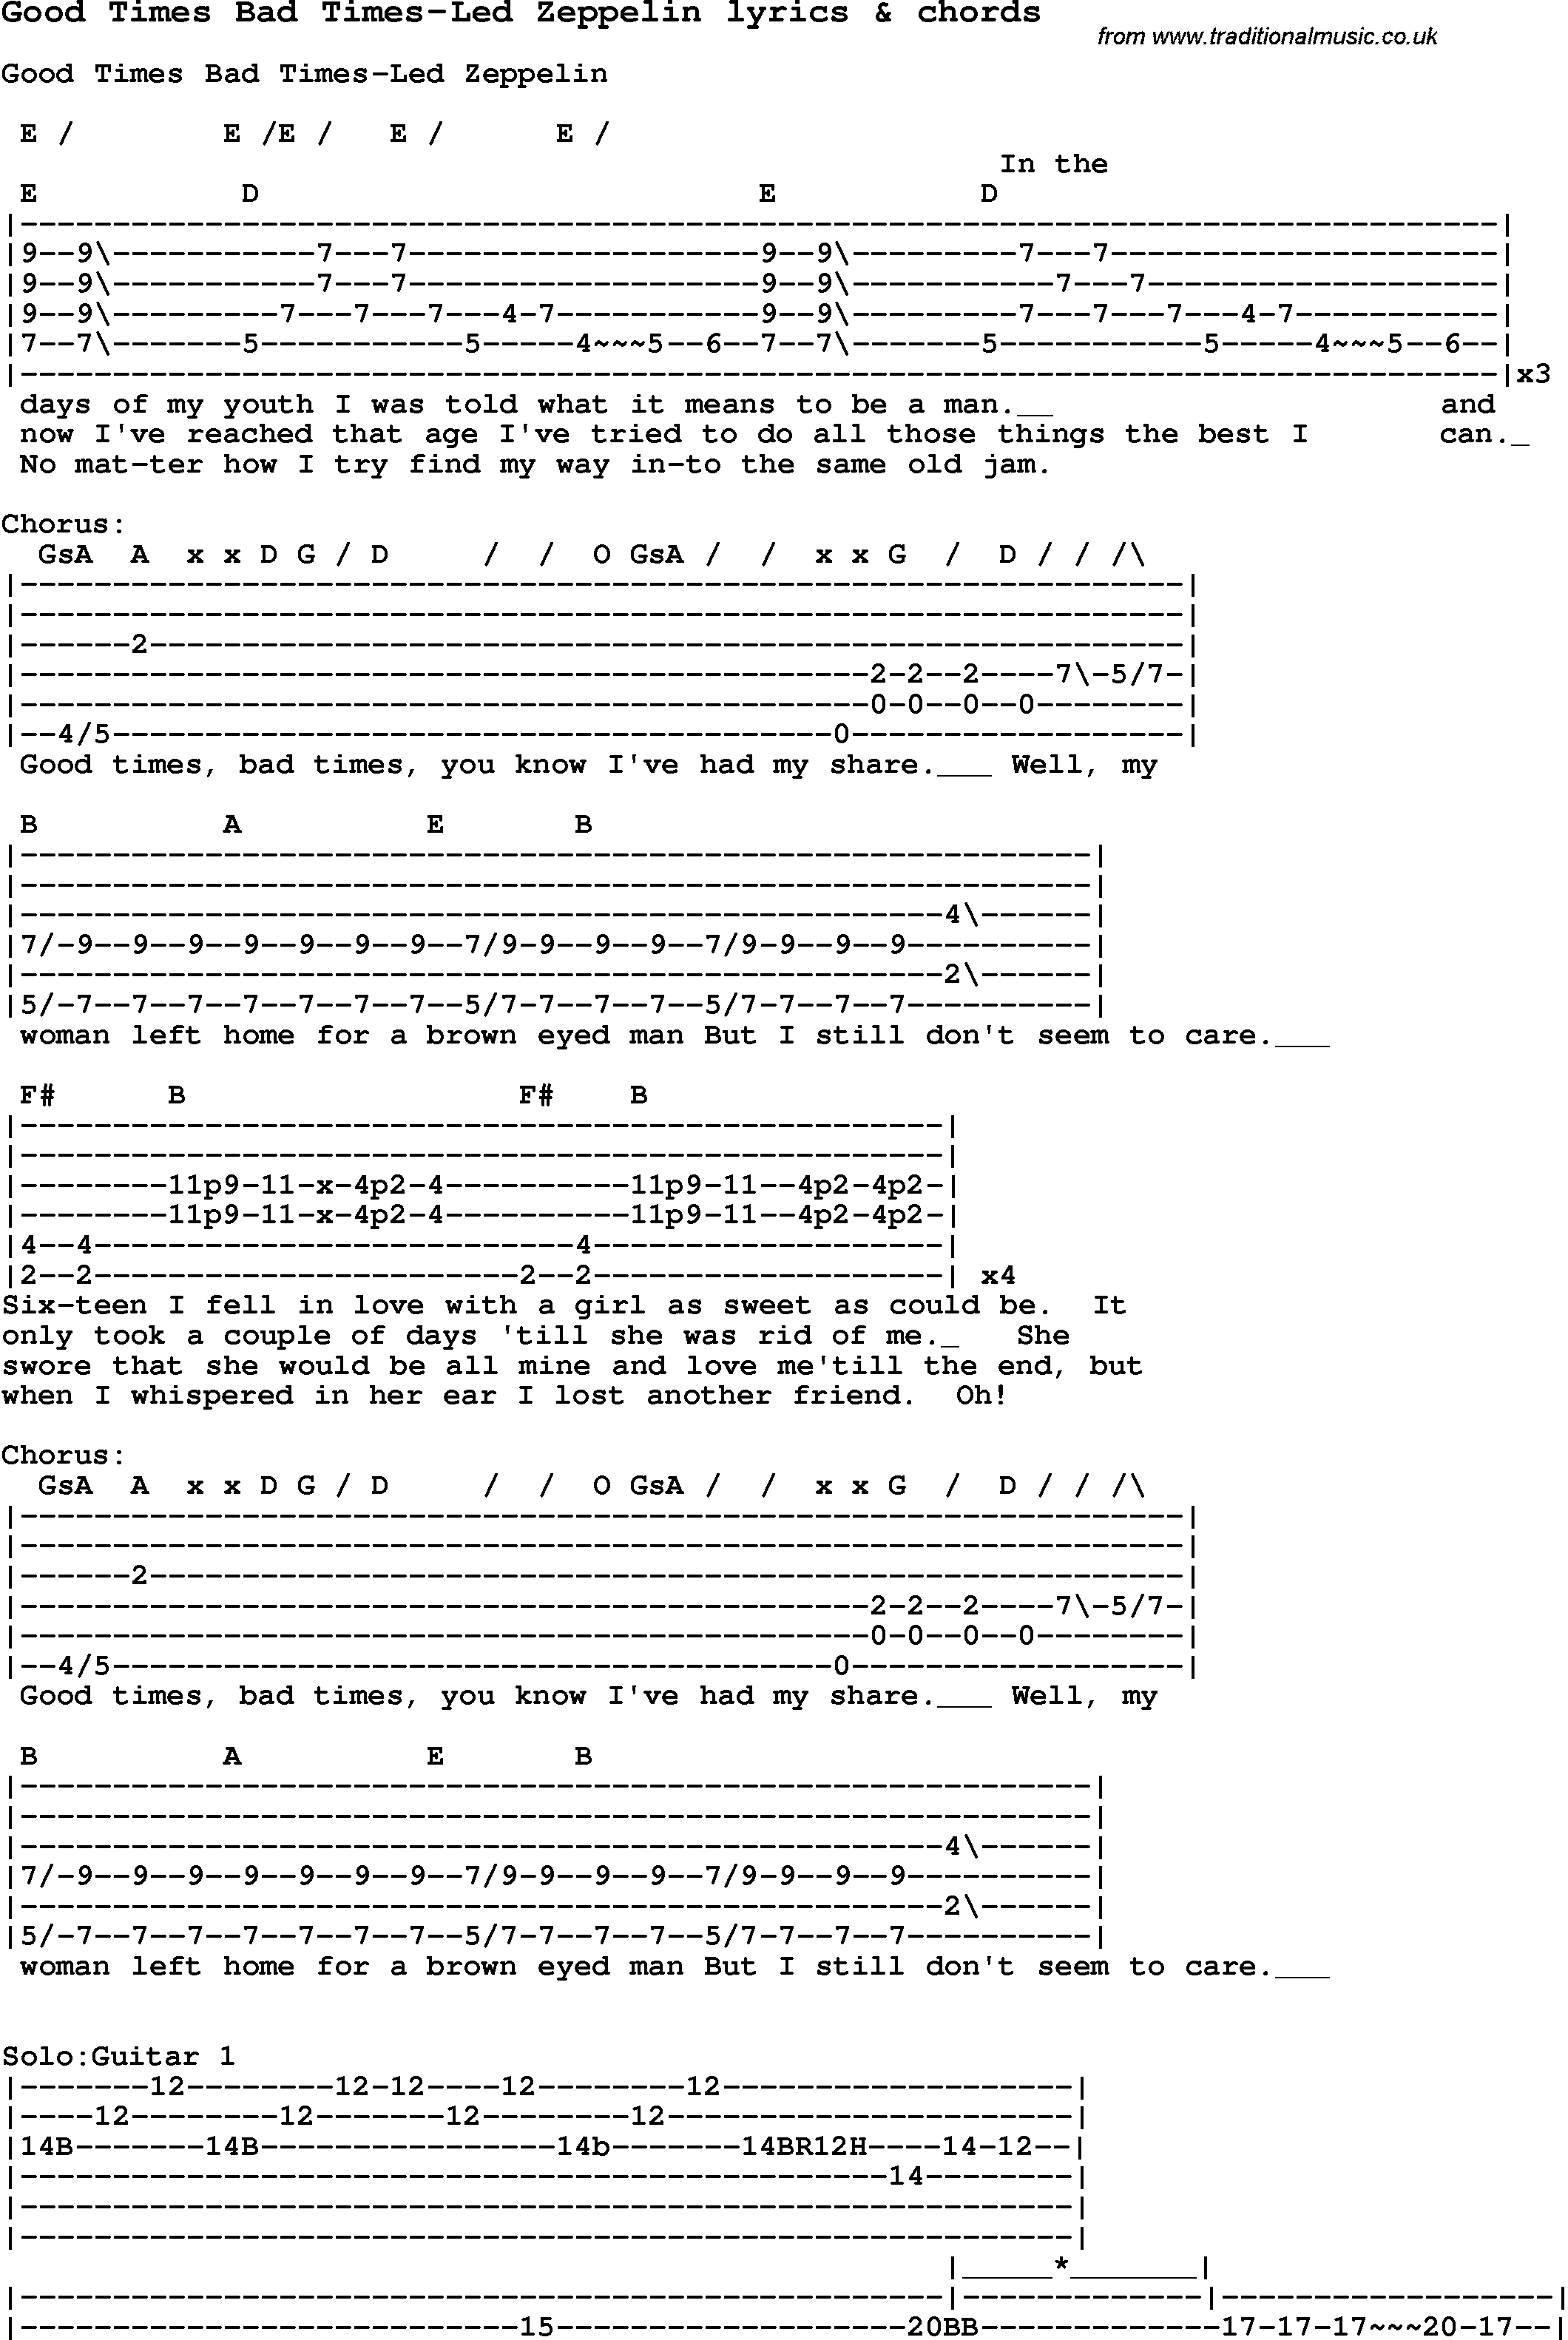 Love Song Lyrics for: Good Times Bad Times-Led Zeppelin with chords for Ukulele, Guitar Banjo etc.